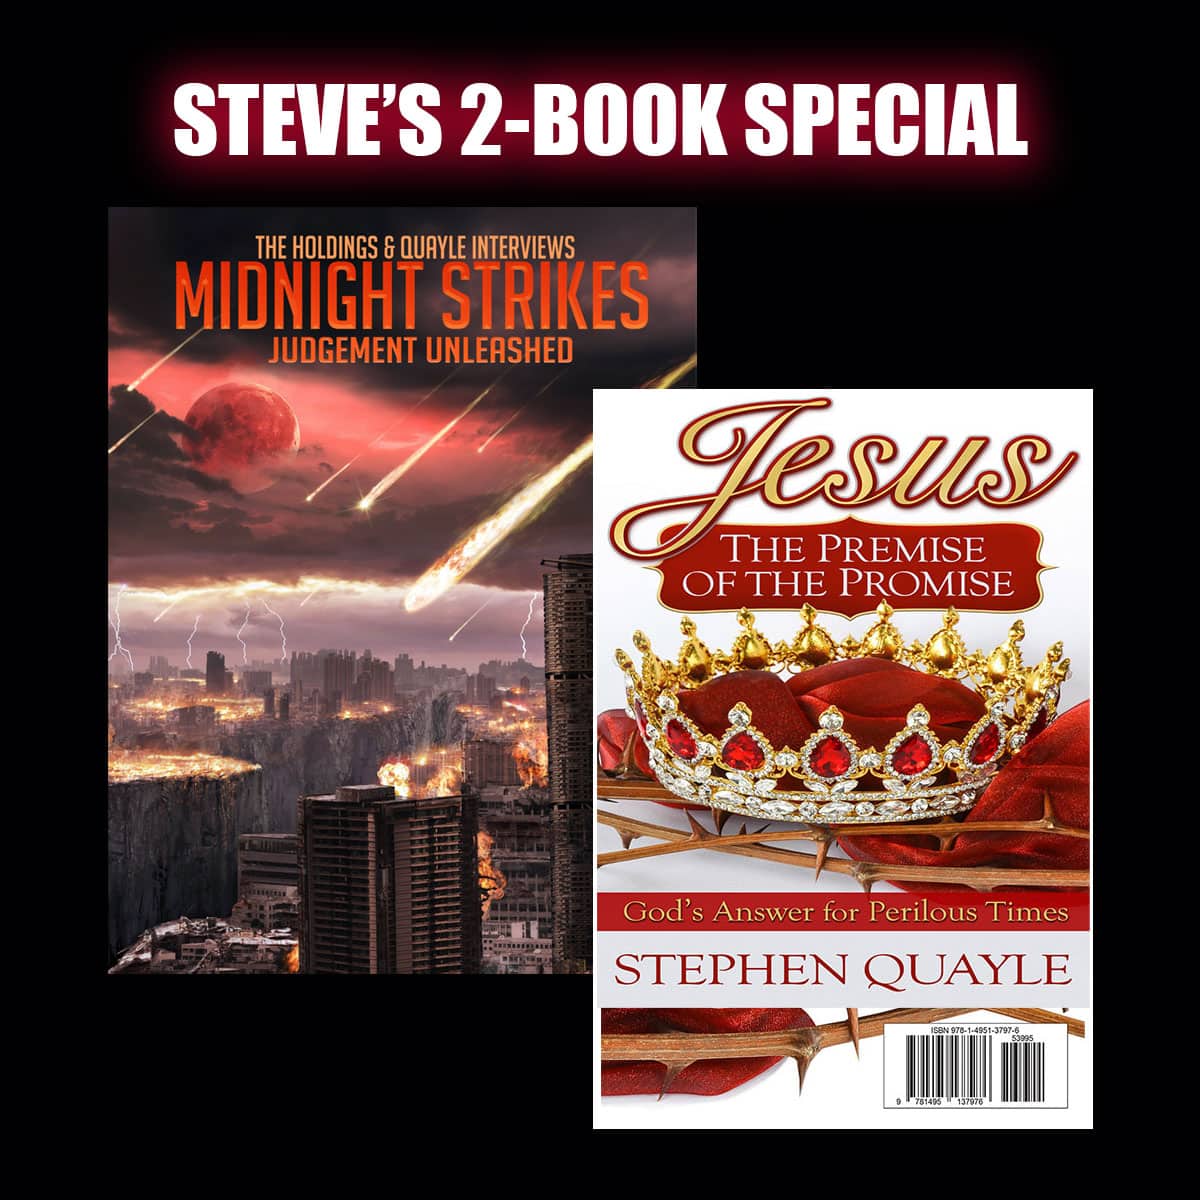 Steve Quayle's 2-Book Special